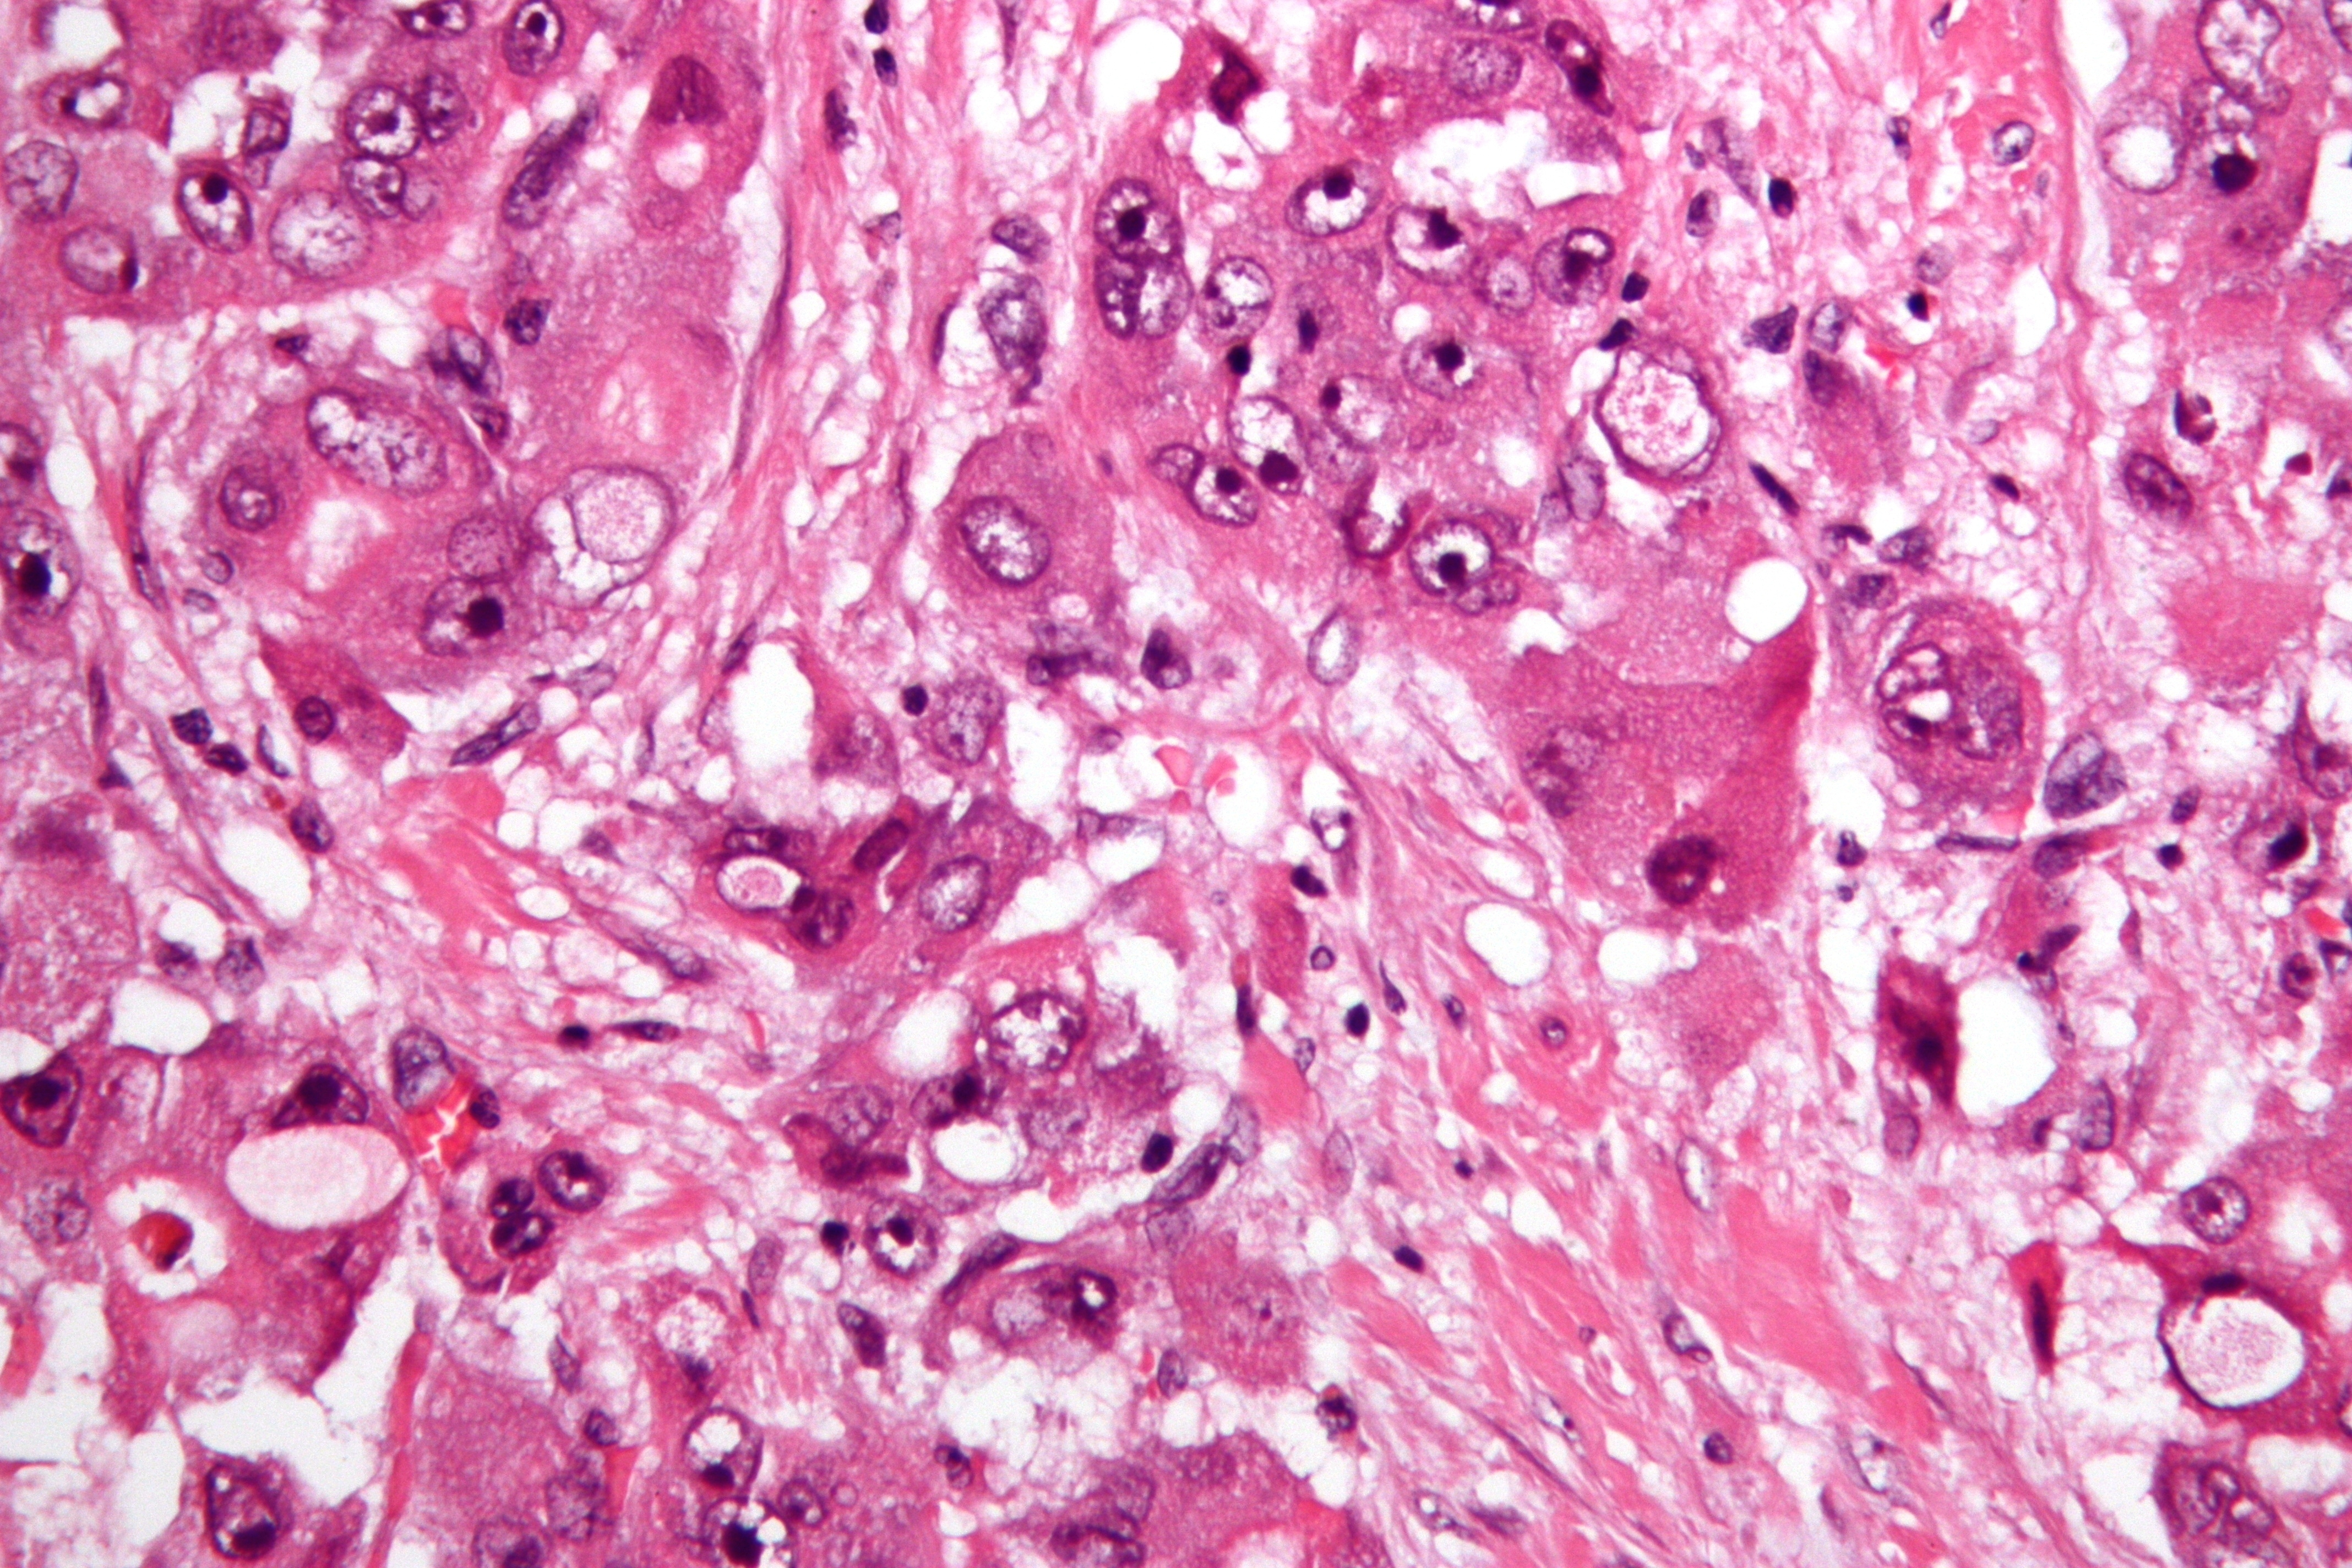 fibrolamellar_hepatocellular_carcinoma_-2-_very_high_mag